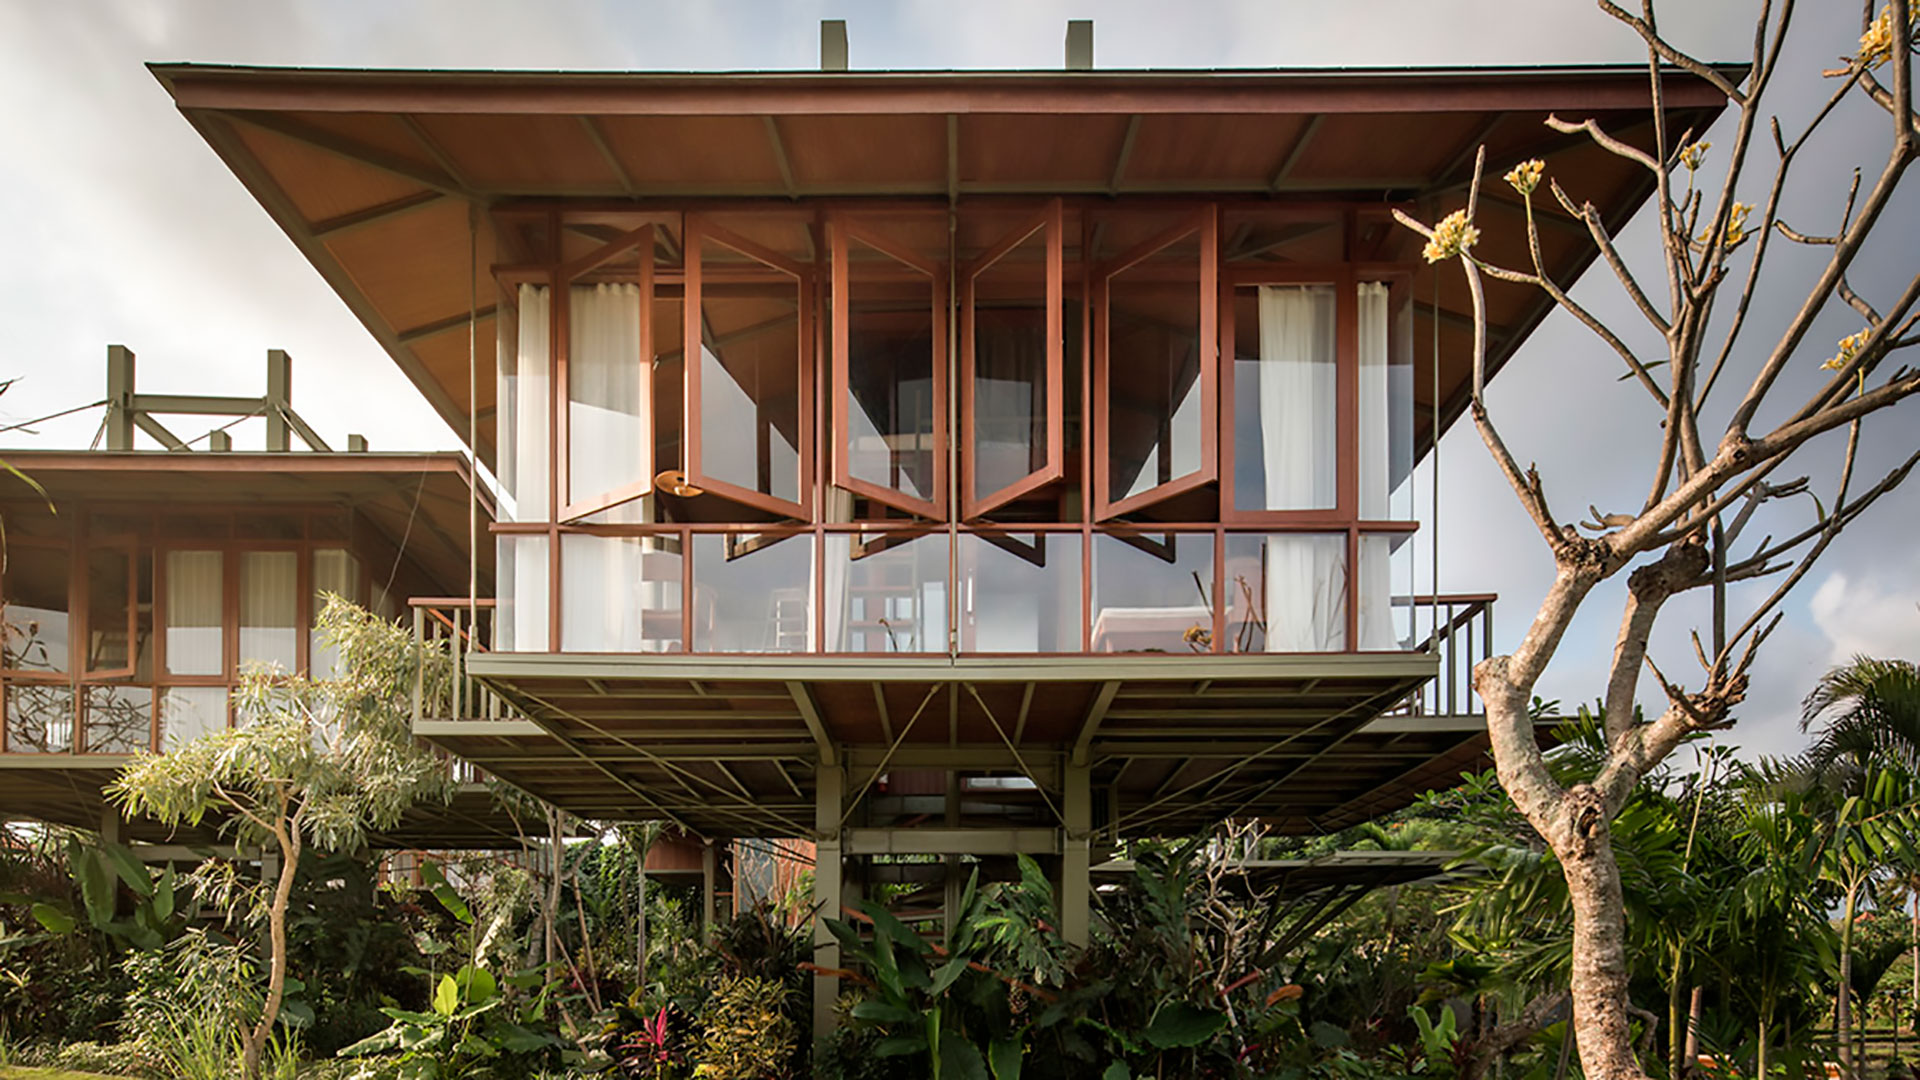 Prefabricated modular houses on stilts in Bali